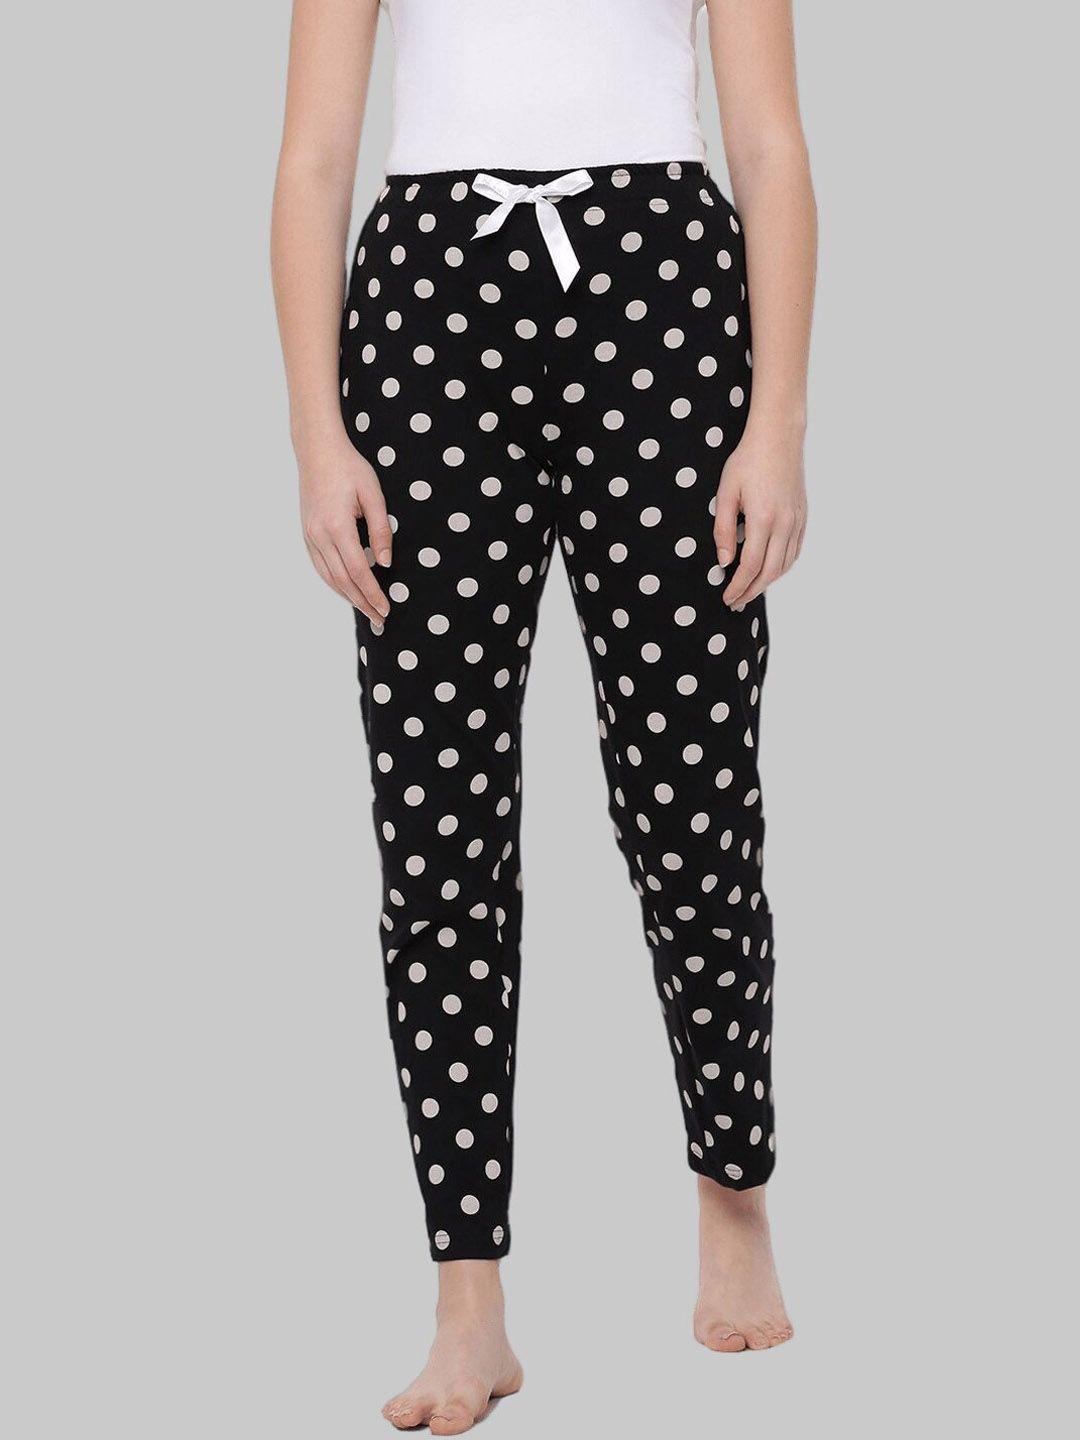 dollar-missy-women-black-polka-dots-printed-pure-cotton-lounge-pants